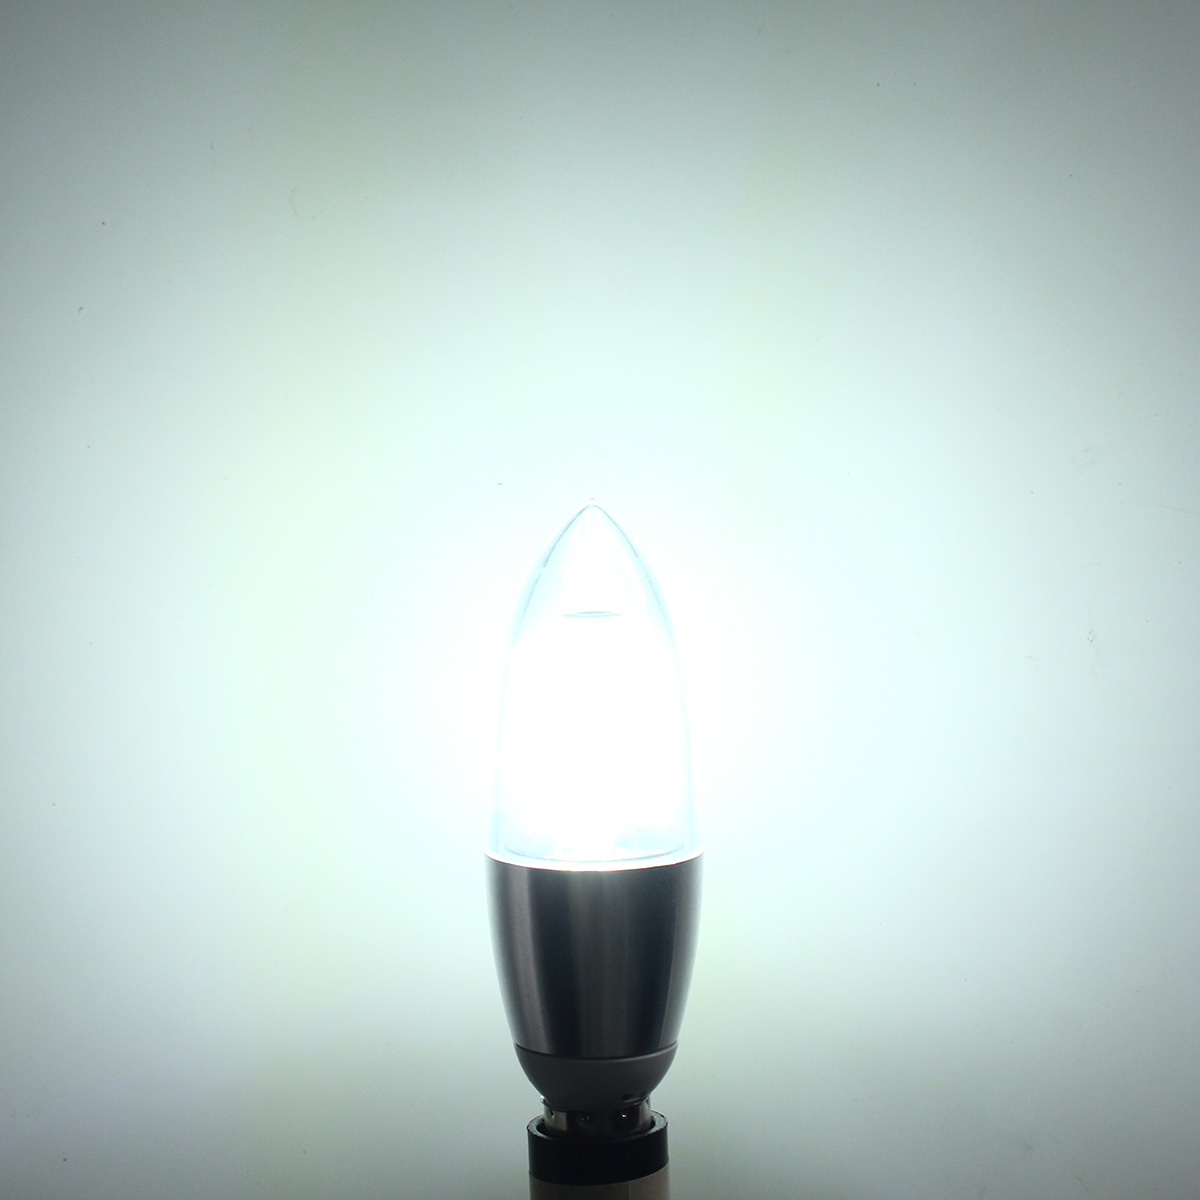 KingSo-LED-Filament-Light-Bulb-Warm-WhiteWhite-Light-550LM--E12-Candelabra-Base-Lamp-55W-Incandescen-1890514-1